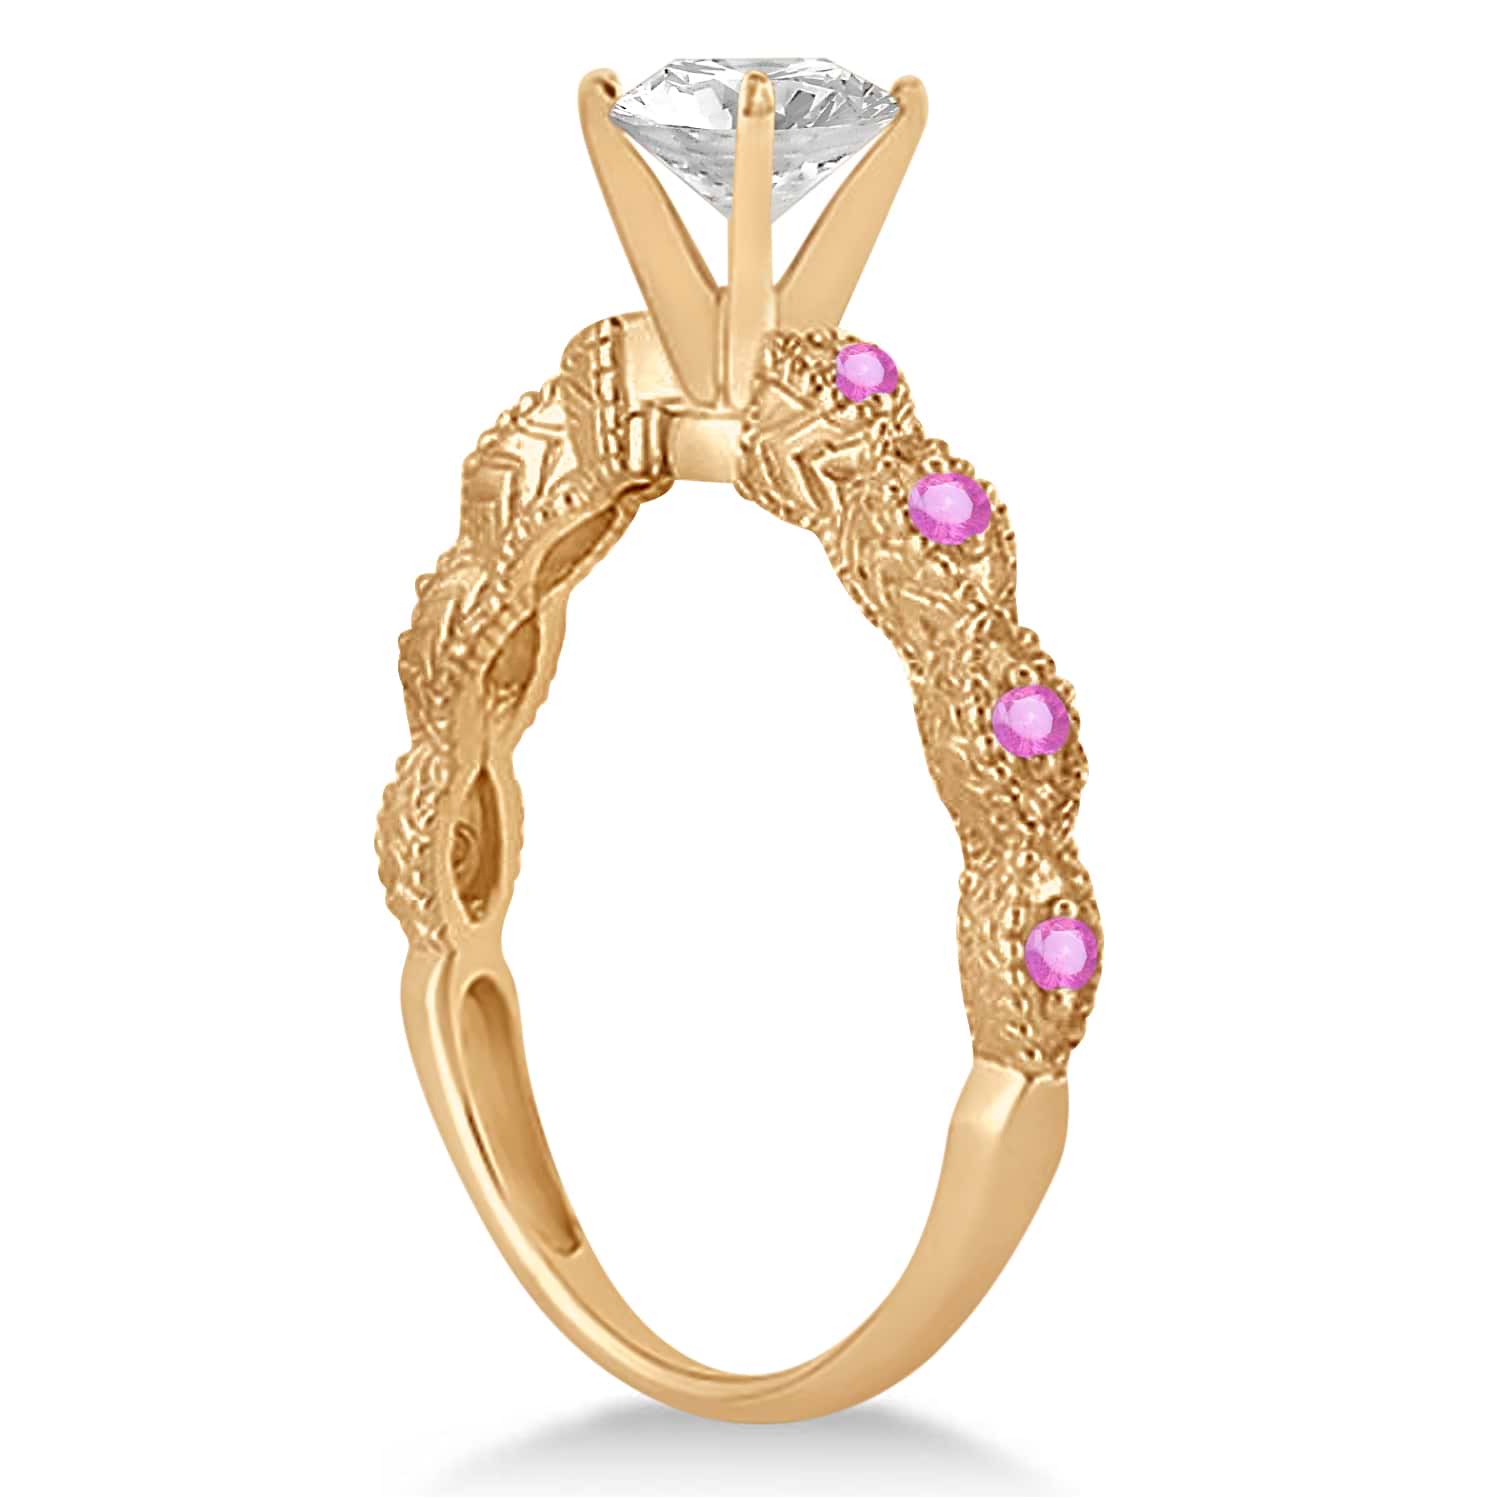 Antique Pink Sapphire Engagement Ring Set 14k Rose Gold (0.36ct)